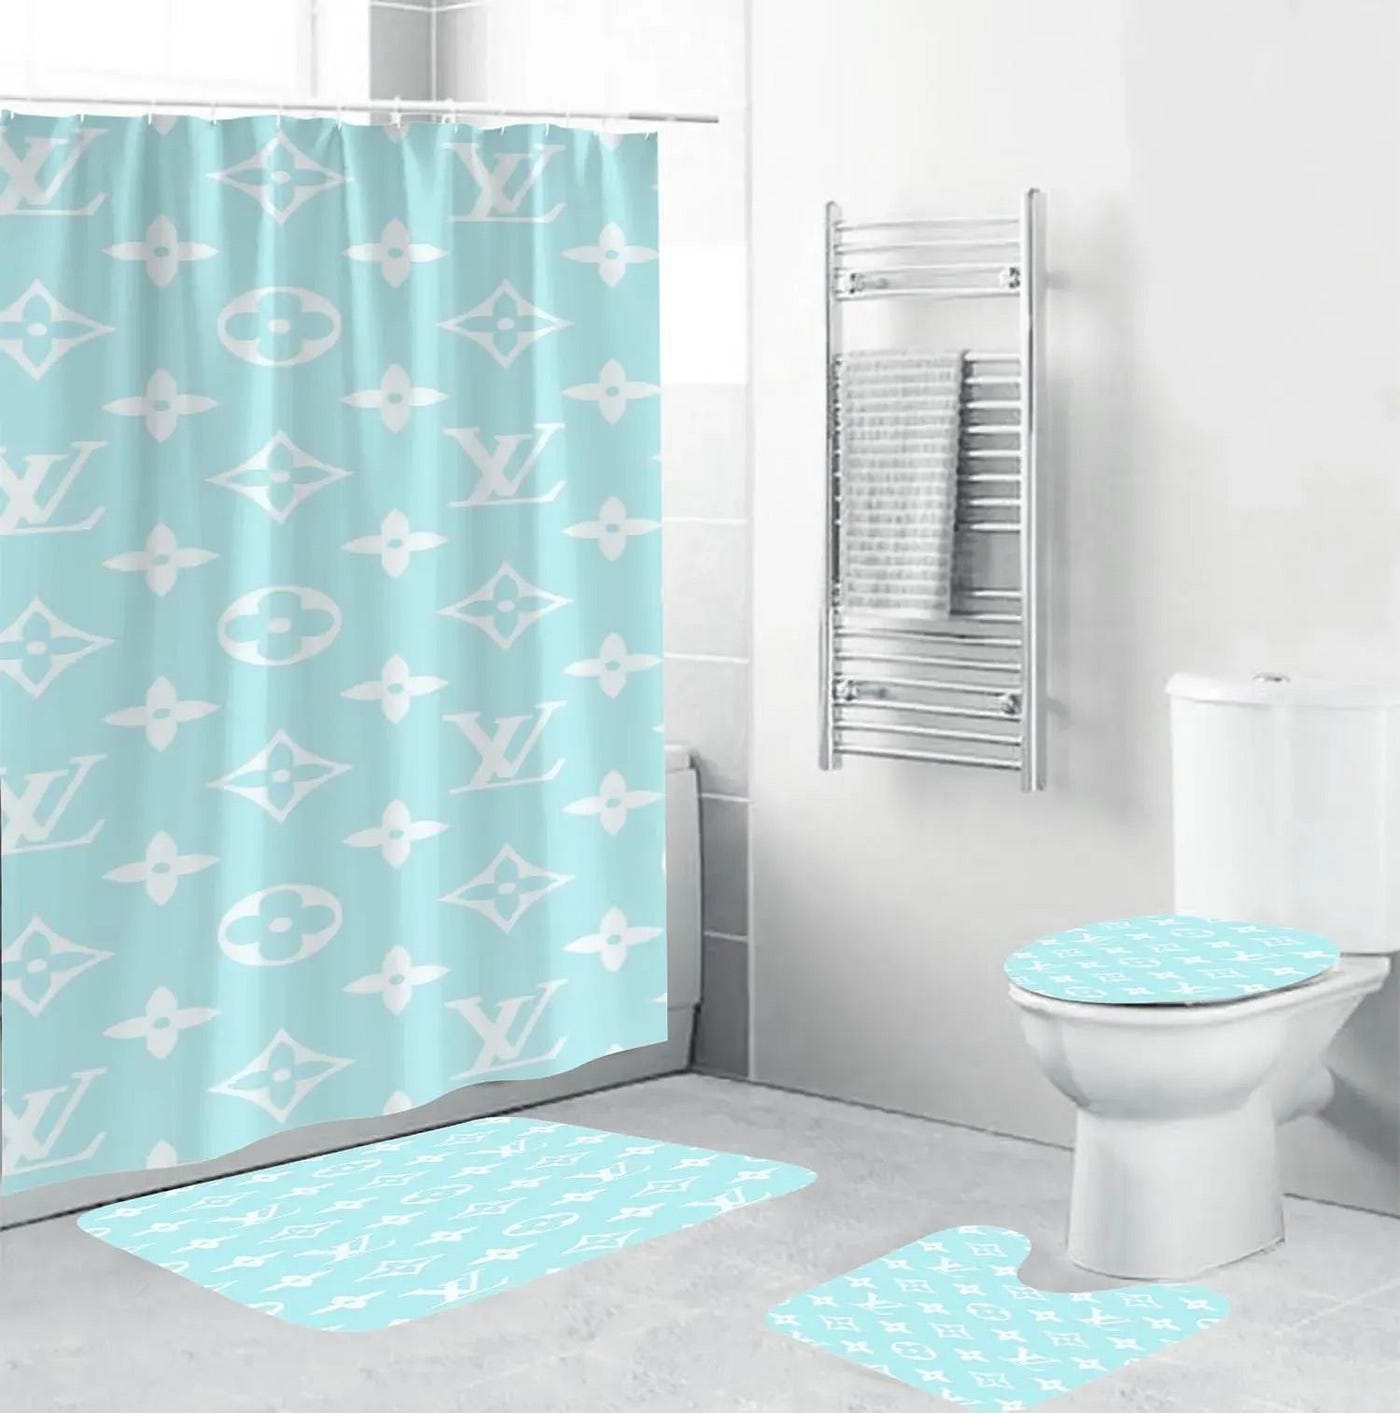 Louis vuitton bathroom - bathroom set style 1 in 2023  Bathroom sets,  Luxury brands fashion, Bathroom styling